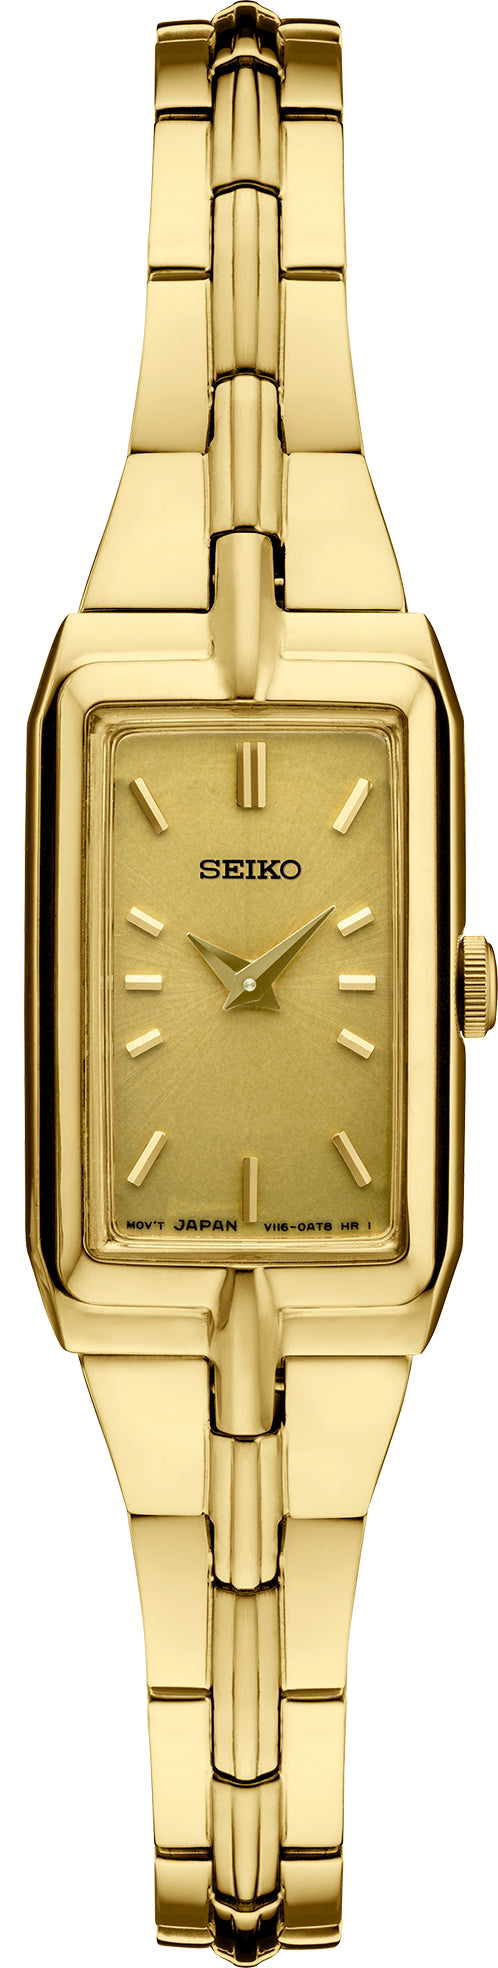 Lds Seiko Swr046 Yellow tone Champagne Dial Watch